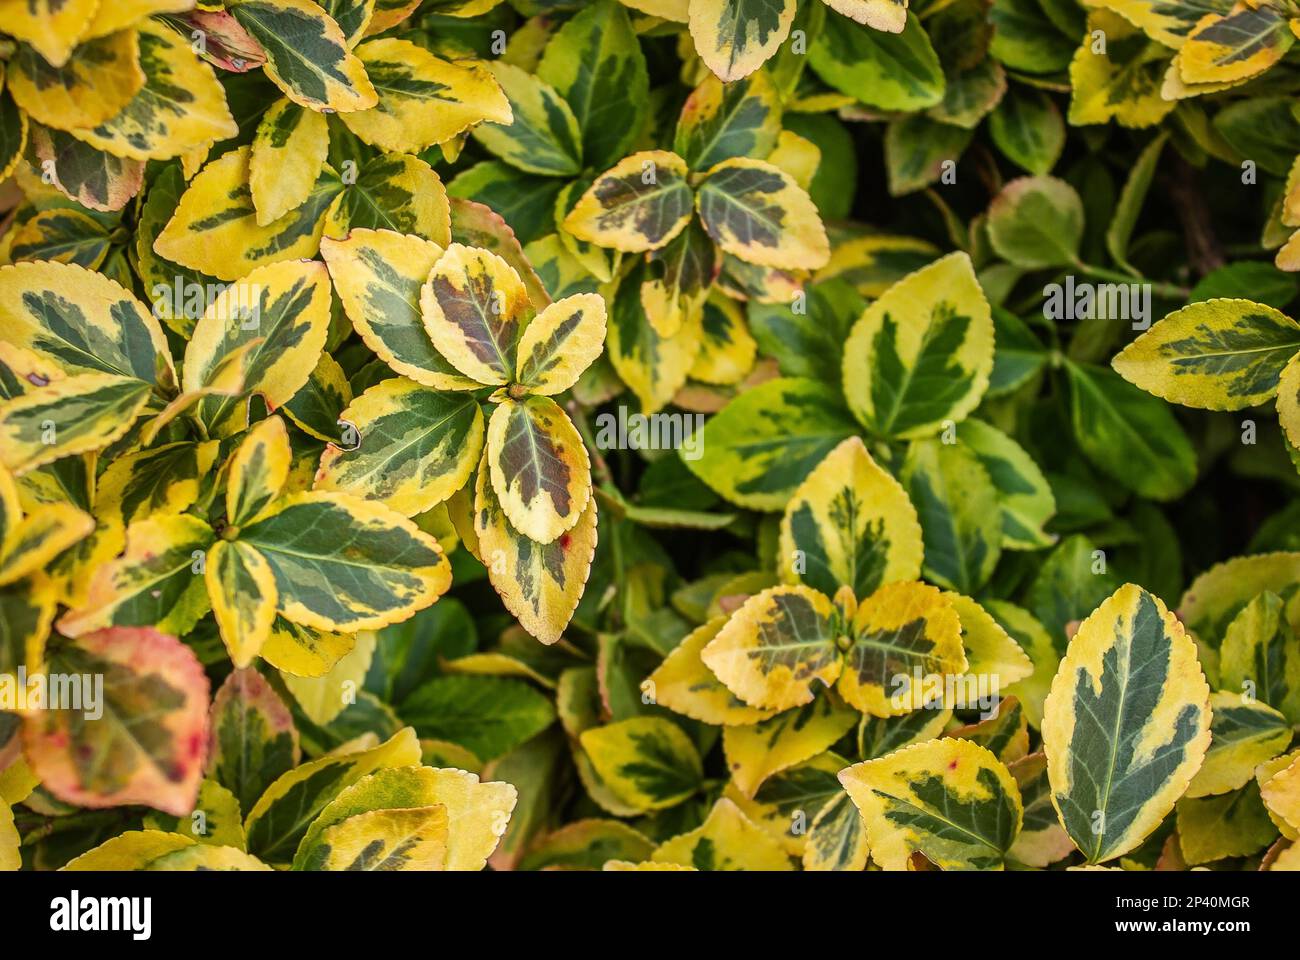 Euonymus fortunei foglie di cultivar d'oro Emeralnd n, foglie gialle e verdi, rami ornamentali, fondo fogliare. Foglie verdi gialle di Euony Foto Stock